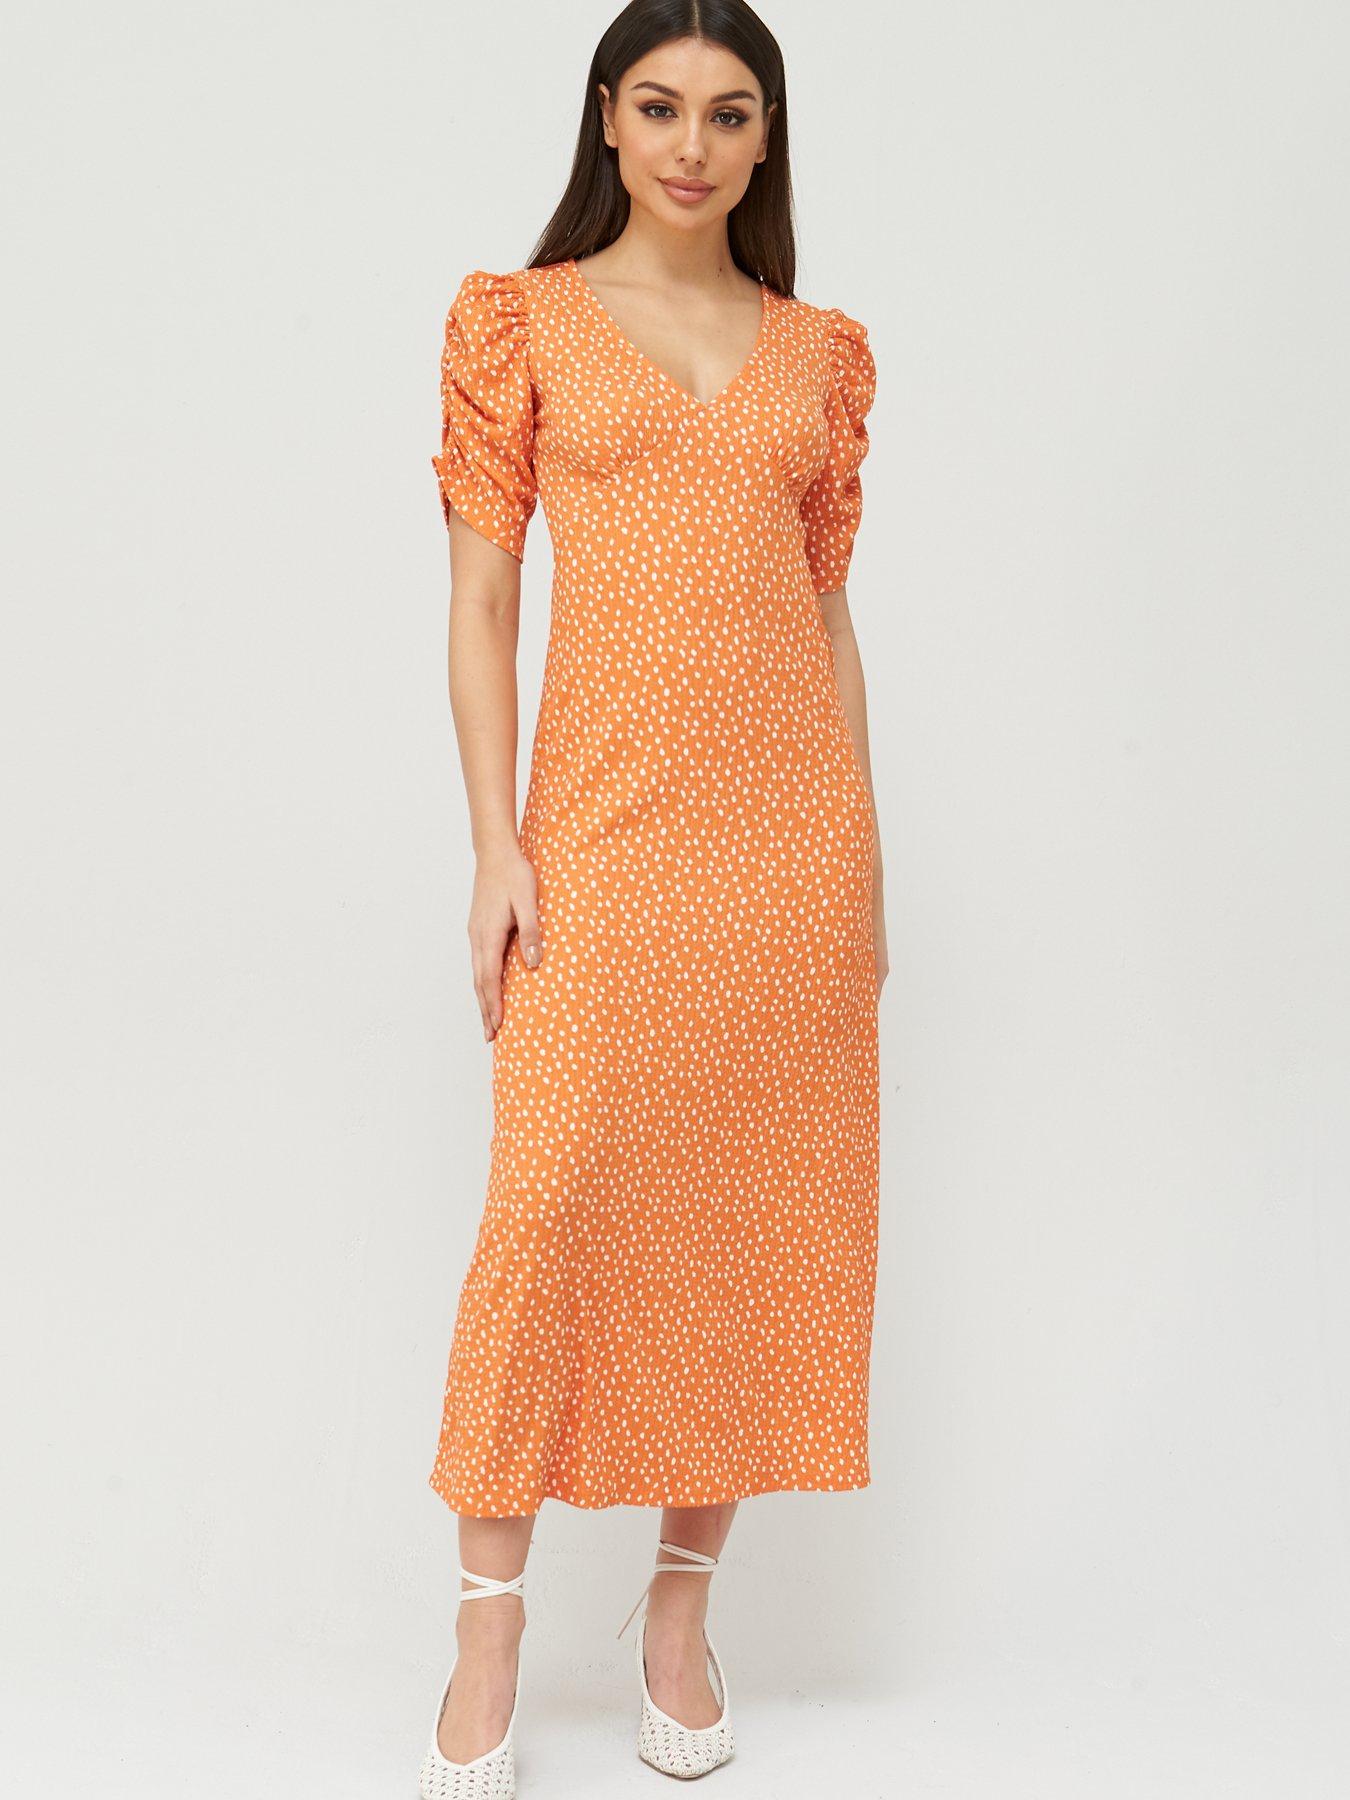 orange midaxi dress